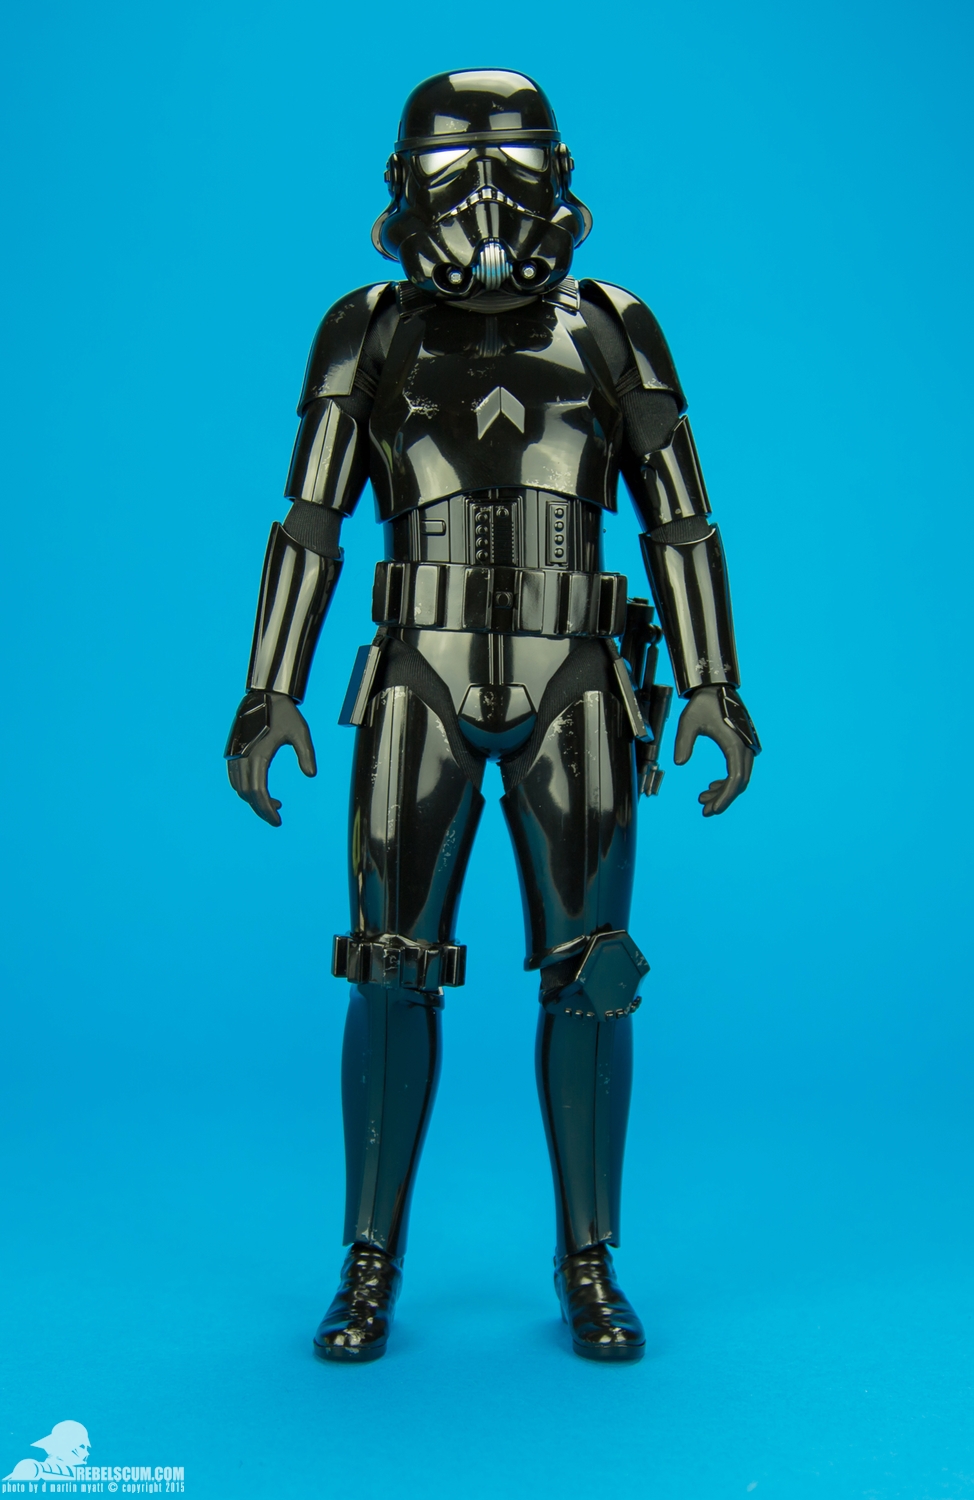 MMS271-Shadow-trooper-Hot-Toys-Star-Wars-figure-001.jpg